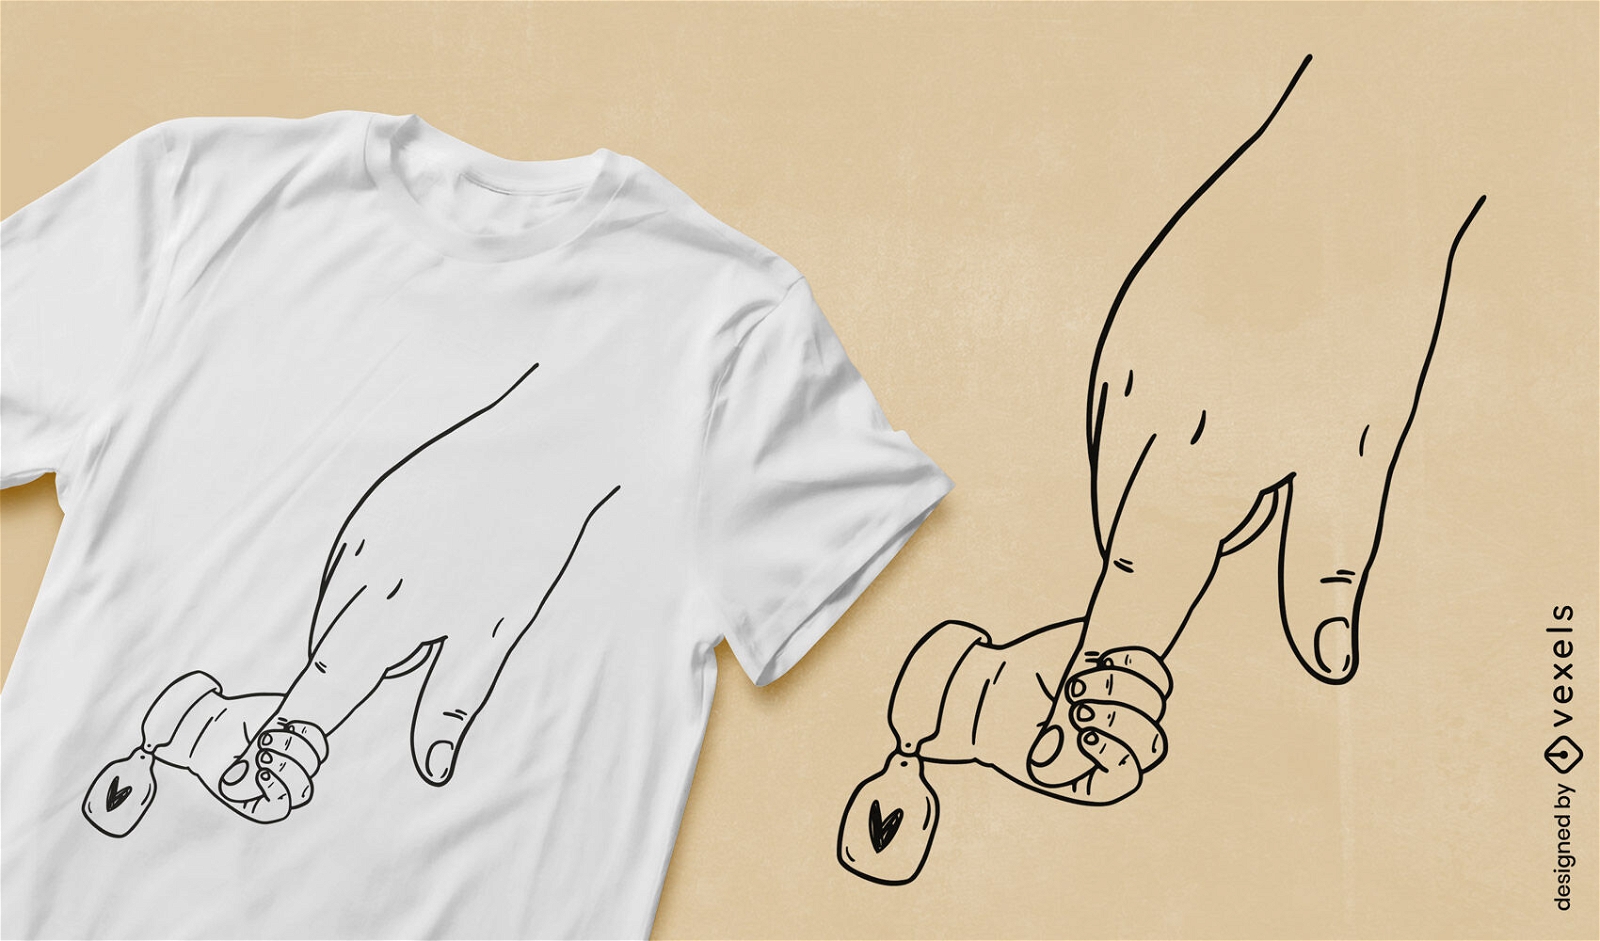 Big hand holding baby hand t-shirt design